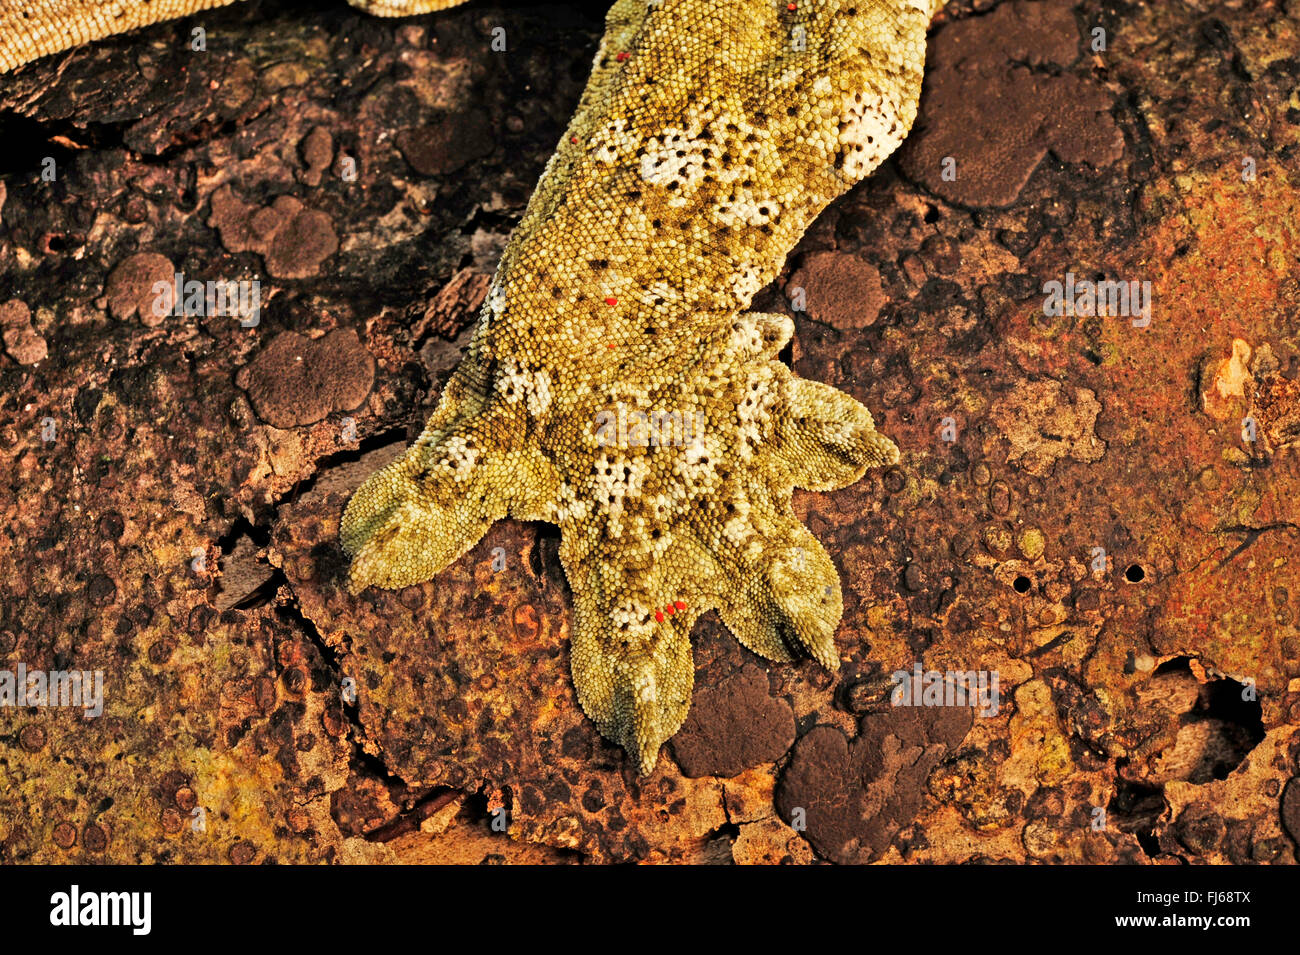 New Caledonian giant gecko, Leach's giant gecko, New Caledonia Giant Gecko   (Rhacodactylus leachianus henkeli, Rhacodactylus henkeli), hand, New Caledonia, Ile des Pins Stock Photo